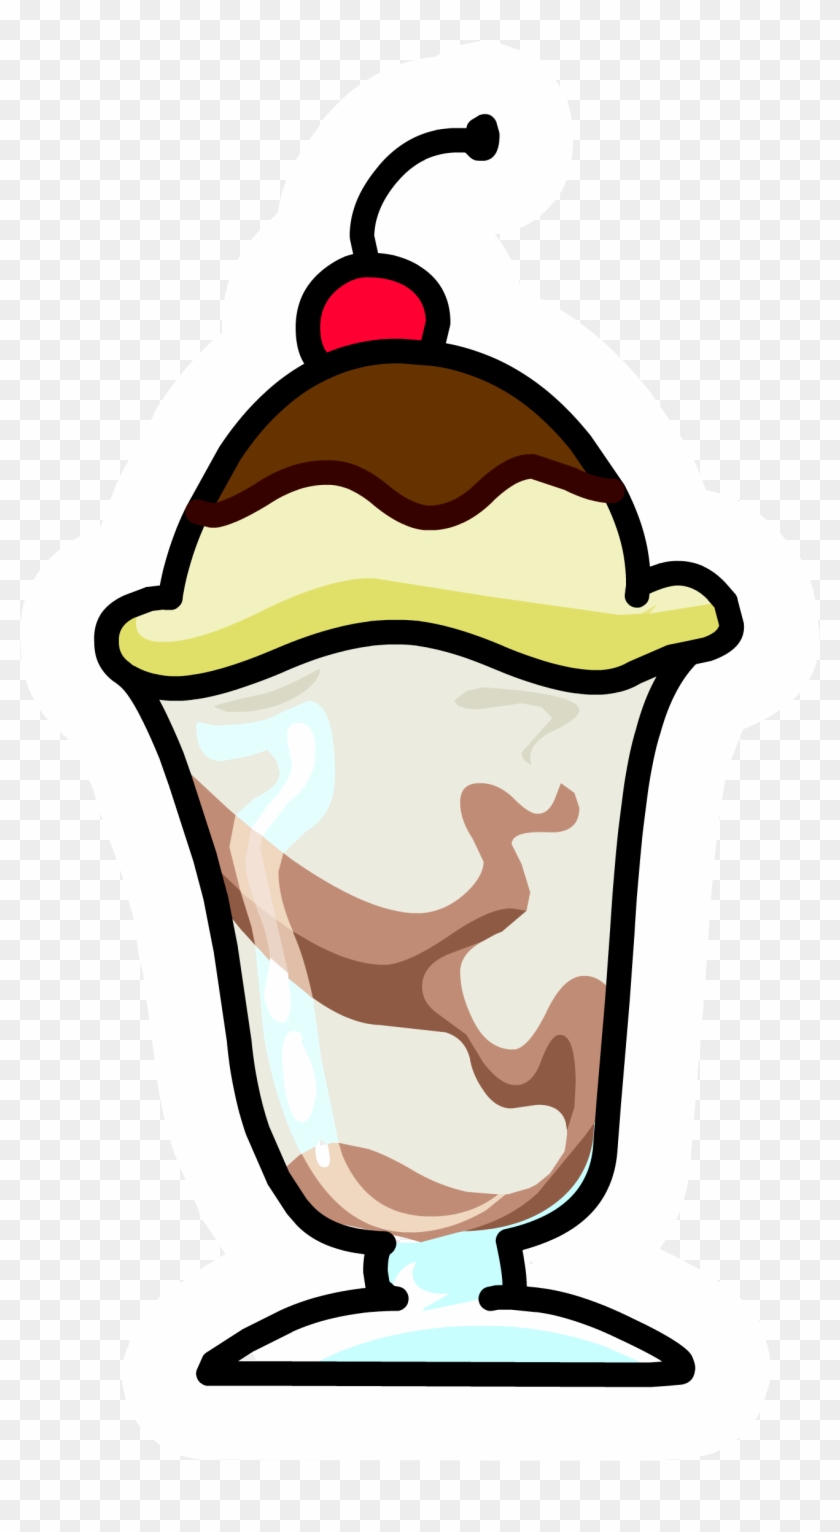 Ice Cream Sundae Clipart - Ice Cream Sundae Cartoon #29700